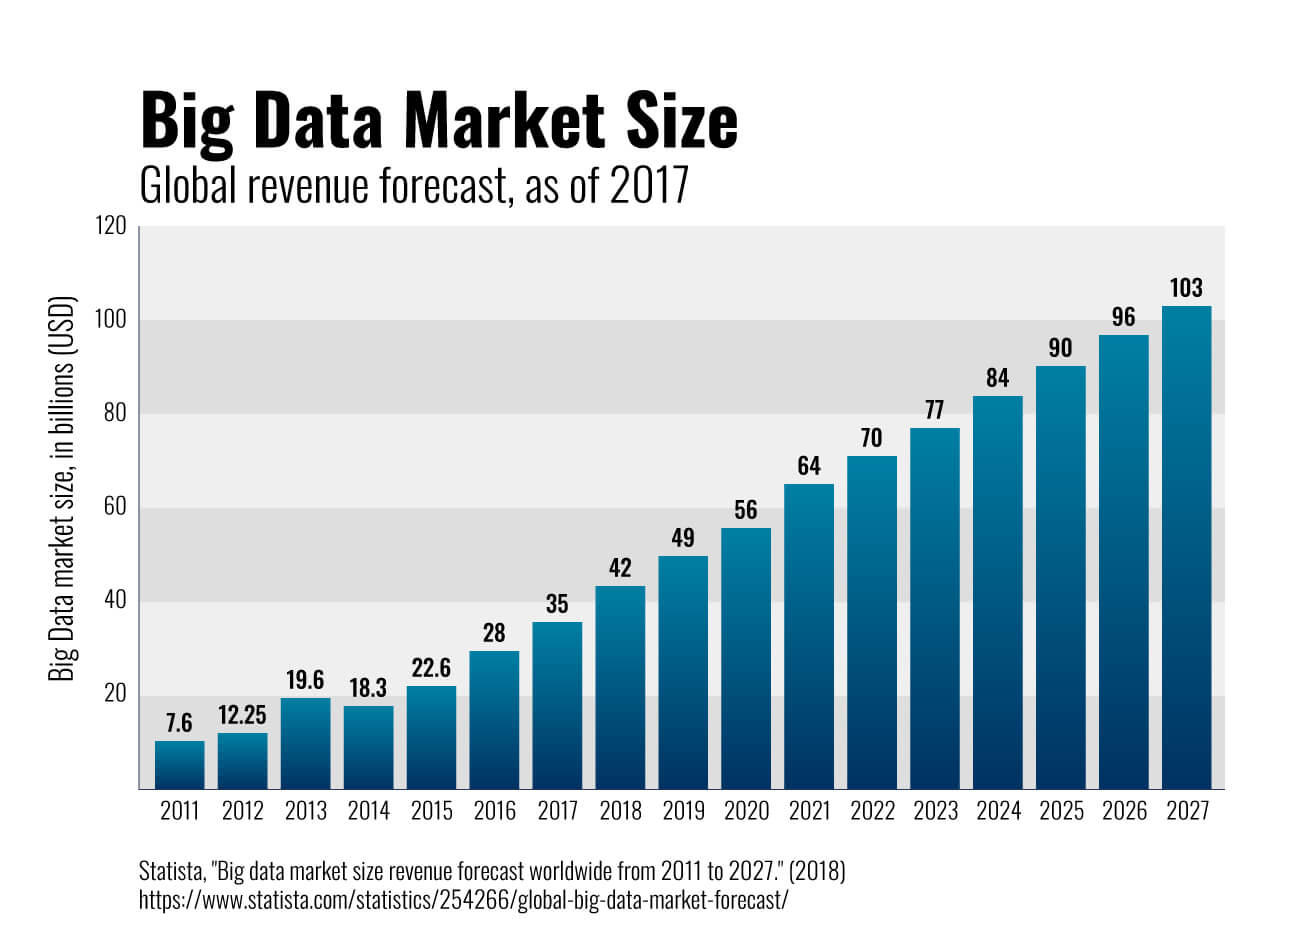 Global Big Data market size and revenue forecast